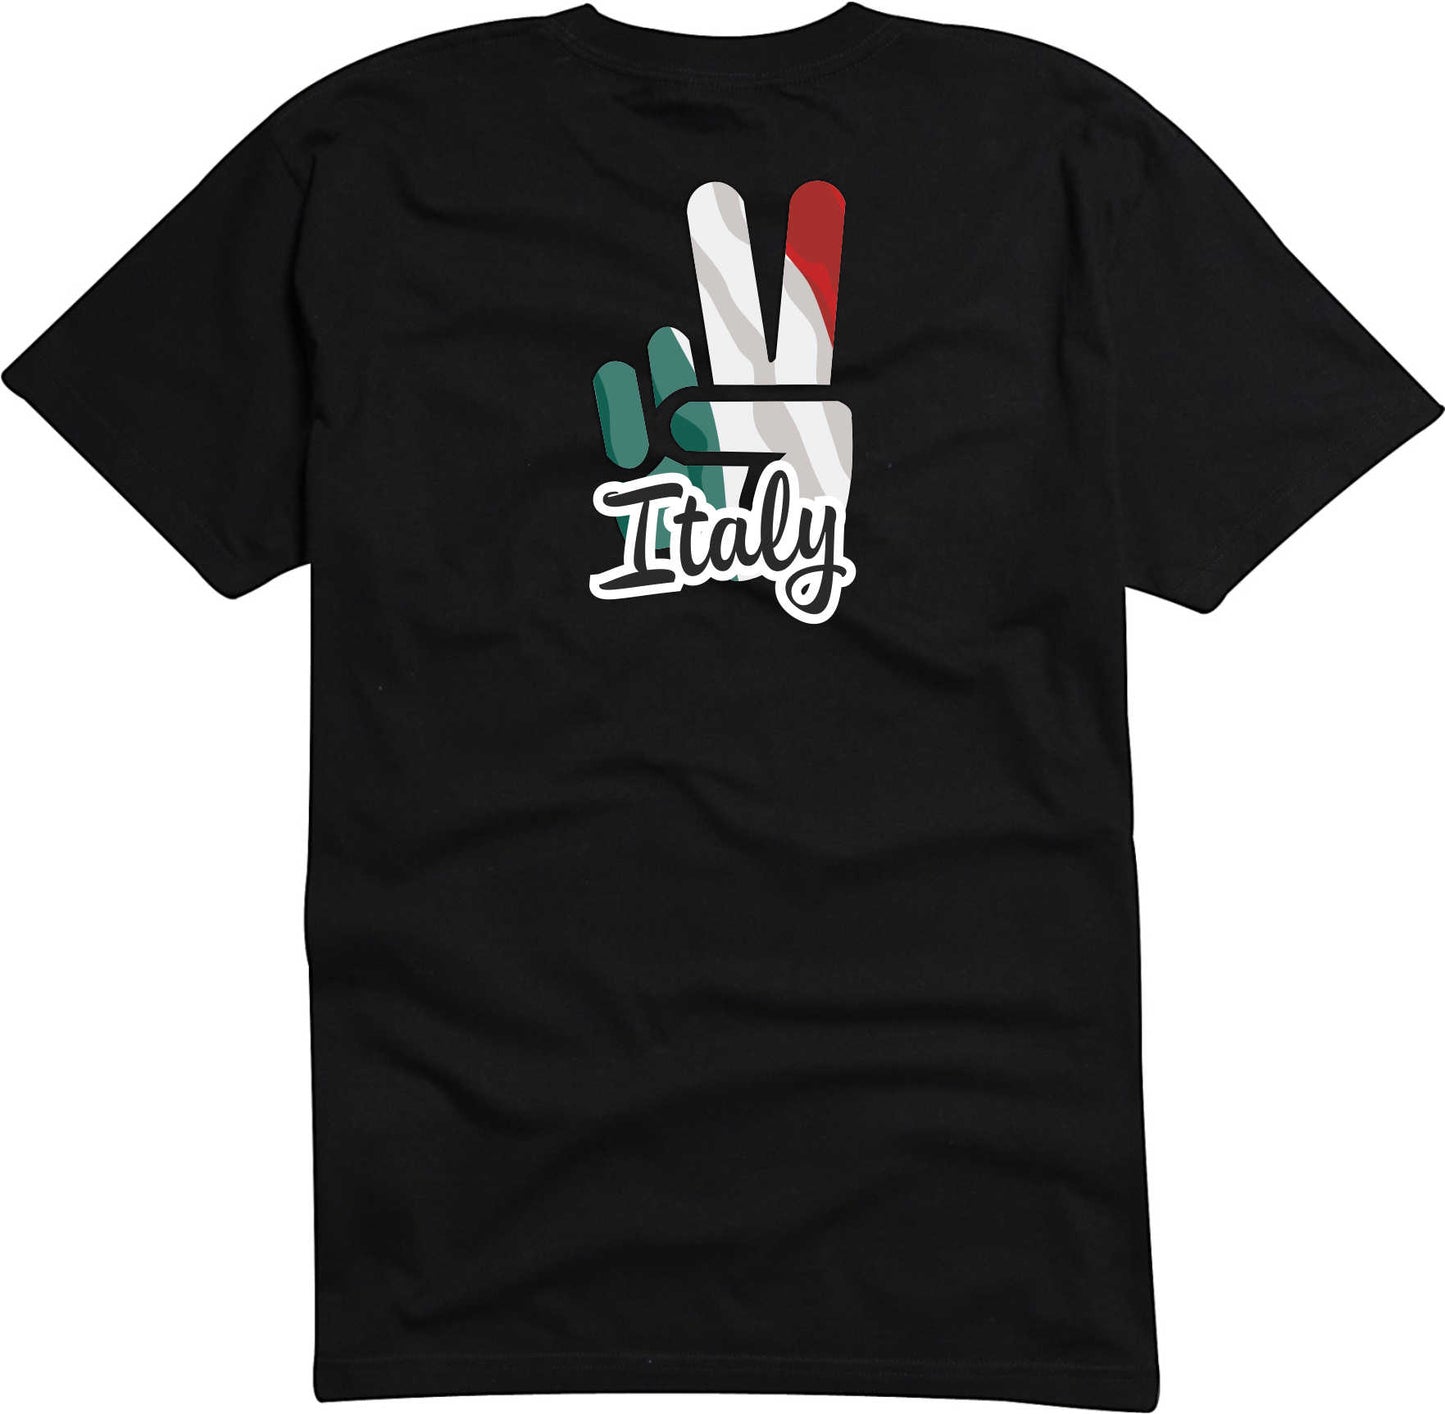 T-Shirt Herren - Victory - Flagge / Fahne - Italy - Sieg